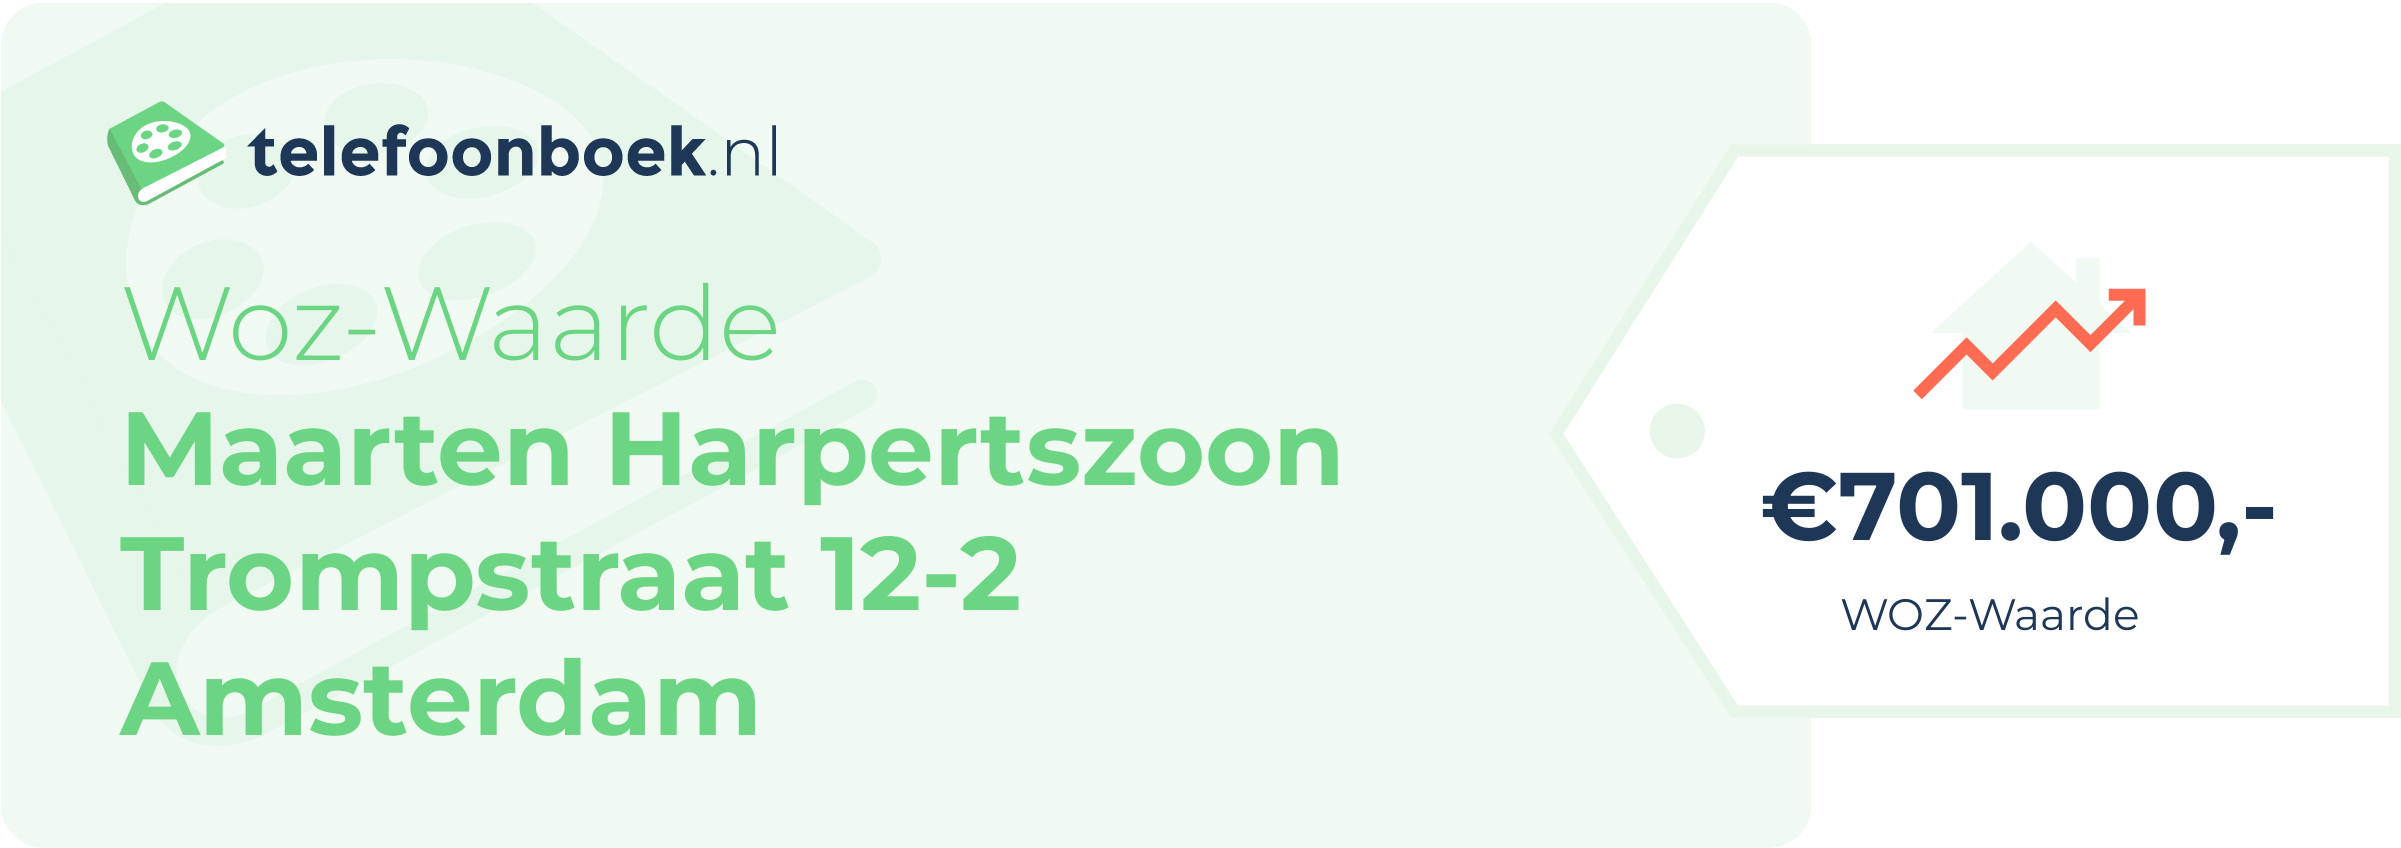 WOZ-waarde Maarten Harpertszoon Trompstraat 12-2 Amsterdam